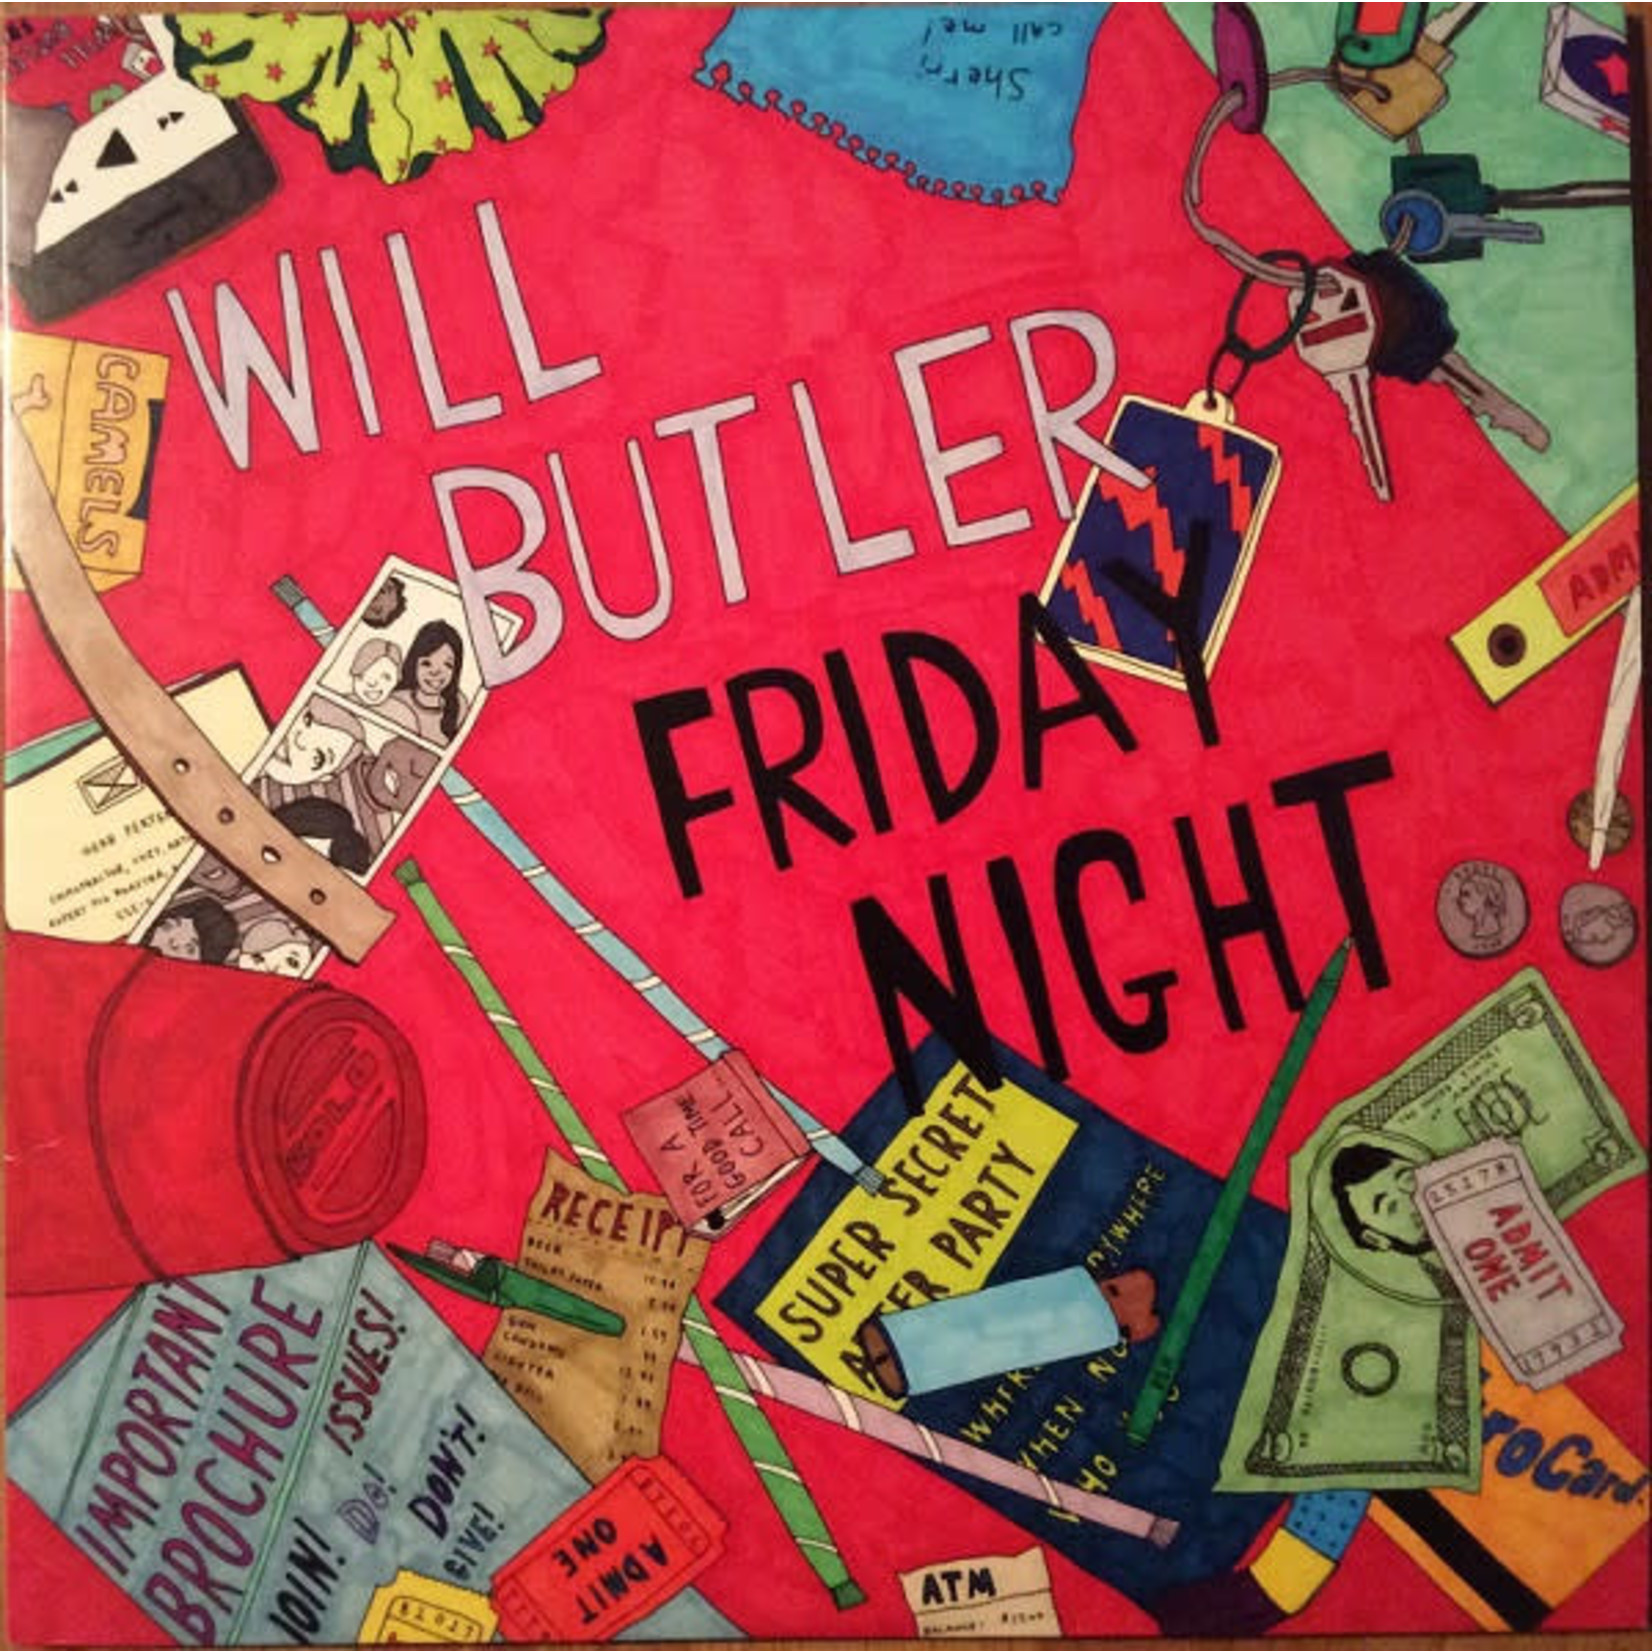 Merge Will Butler - Friday Night (LP)